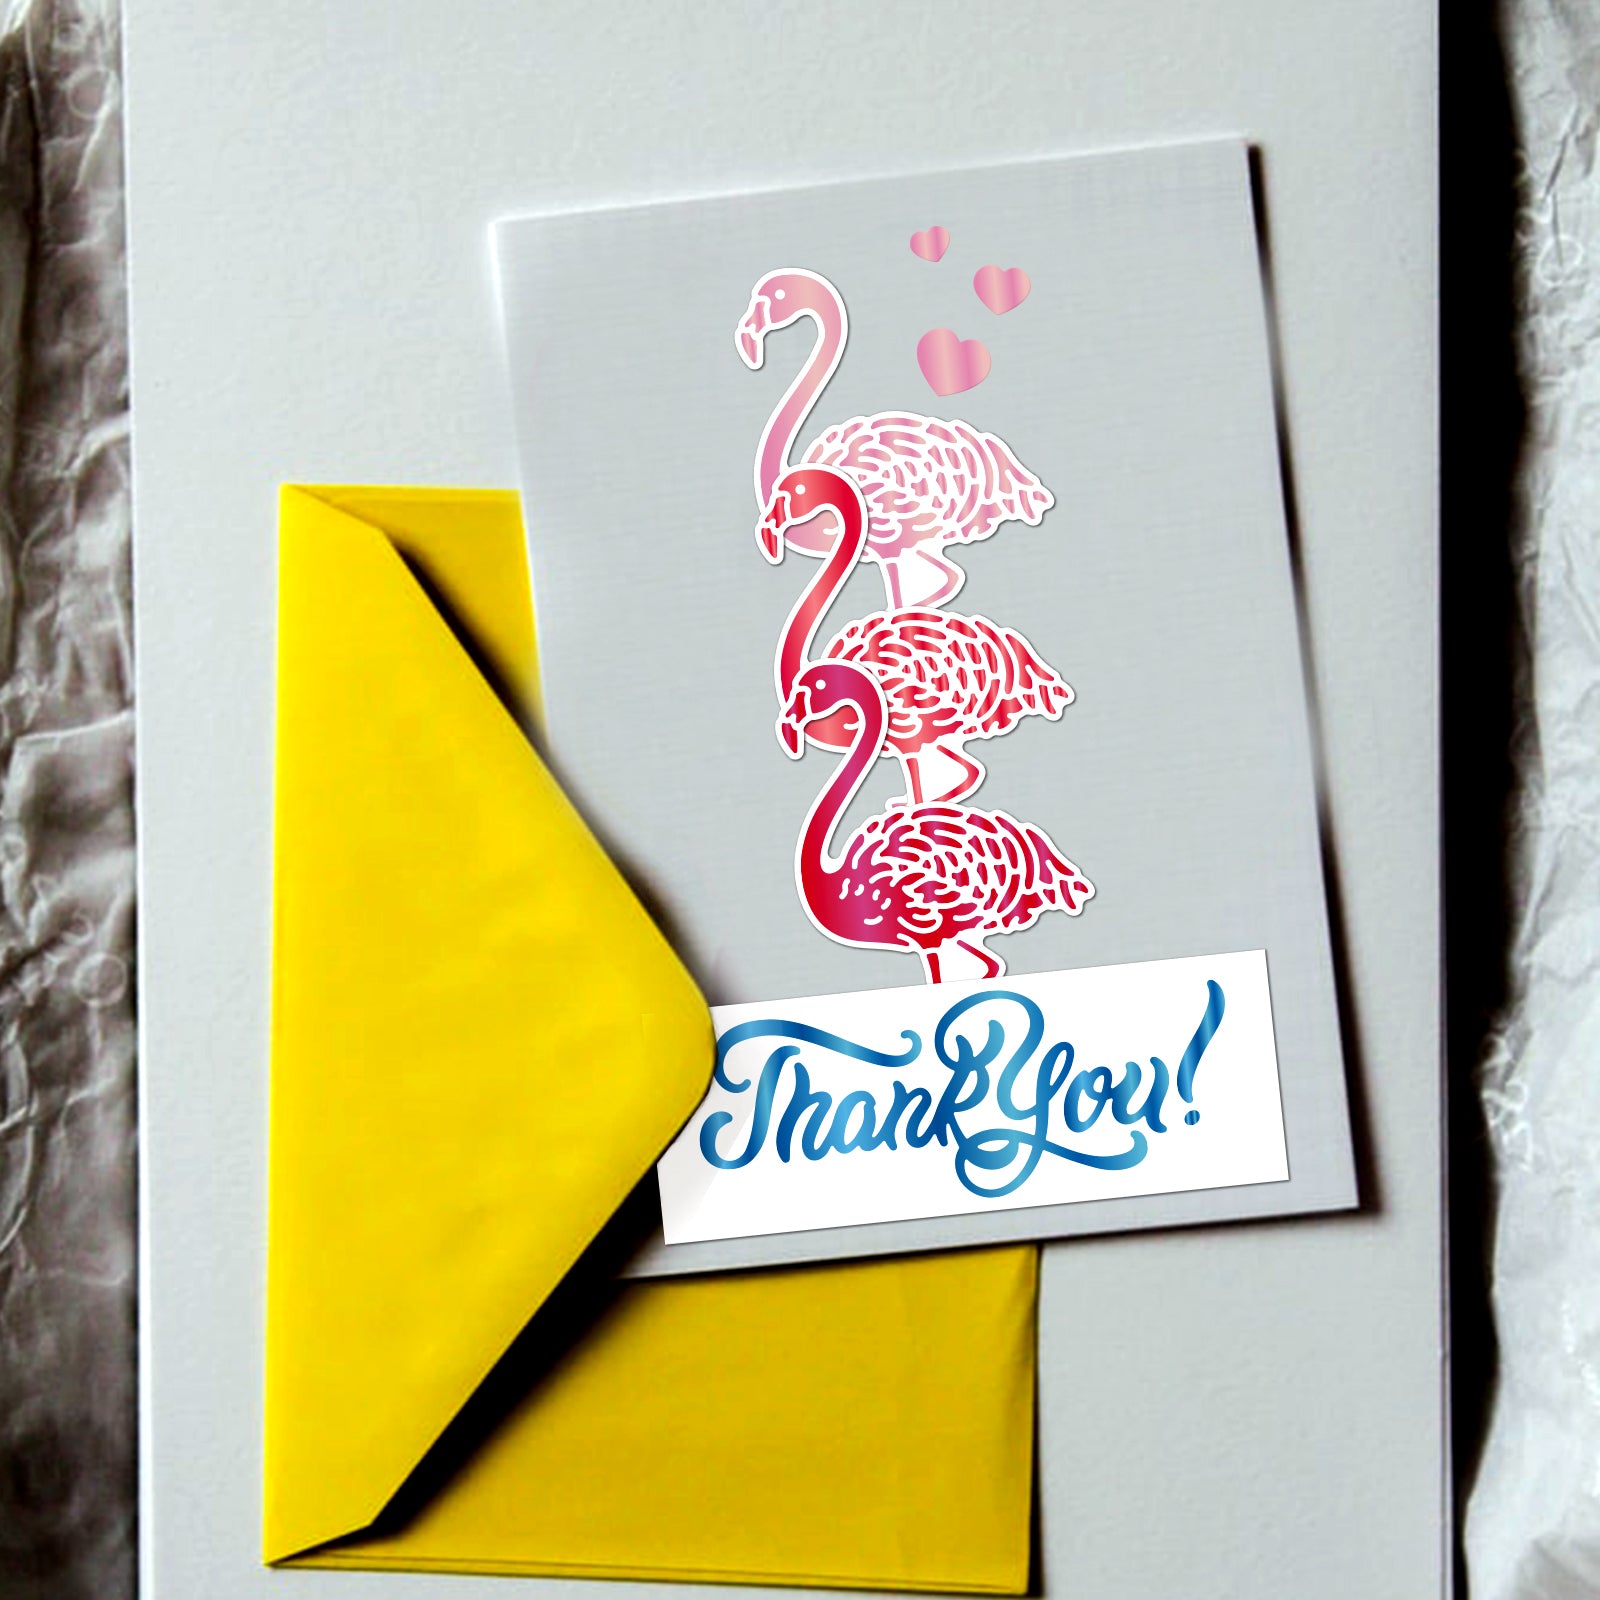 Globleland Hot Foil Plate, for DIY Scrapbooking, Photo Album Decorative, Cards Making, Stamp Sheets, Flamingo, Monstera, Flower Theme Patterns